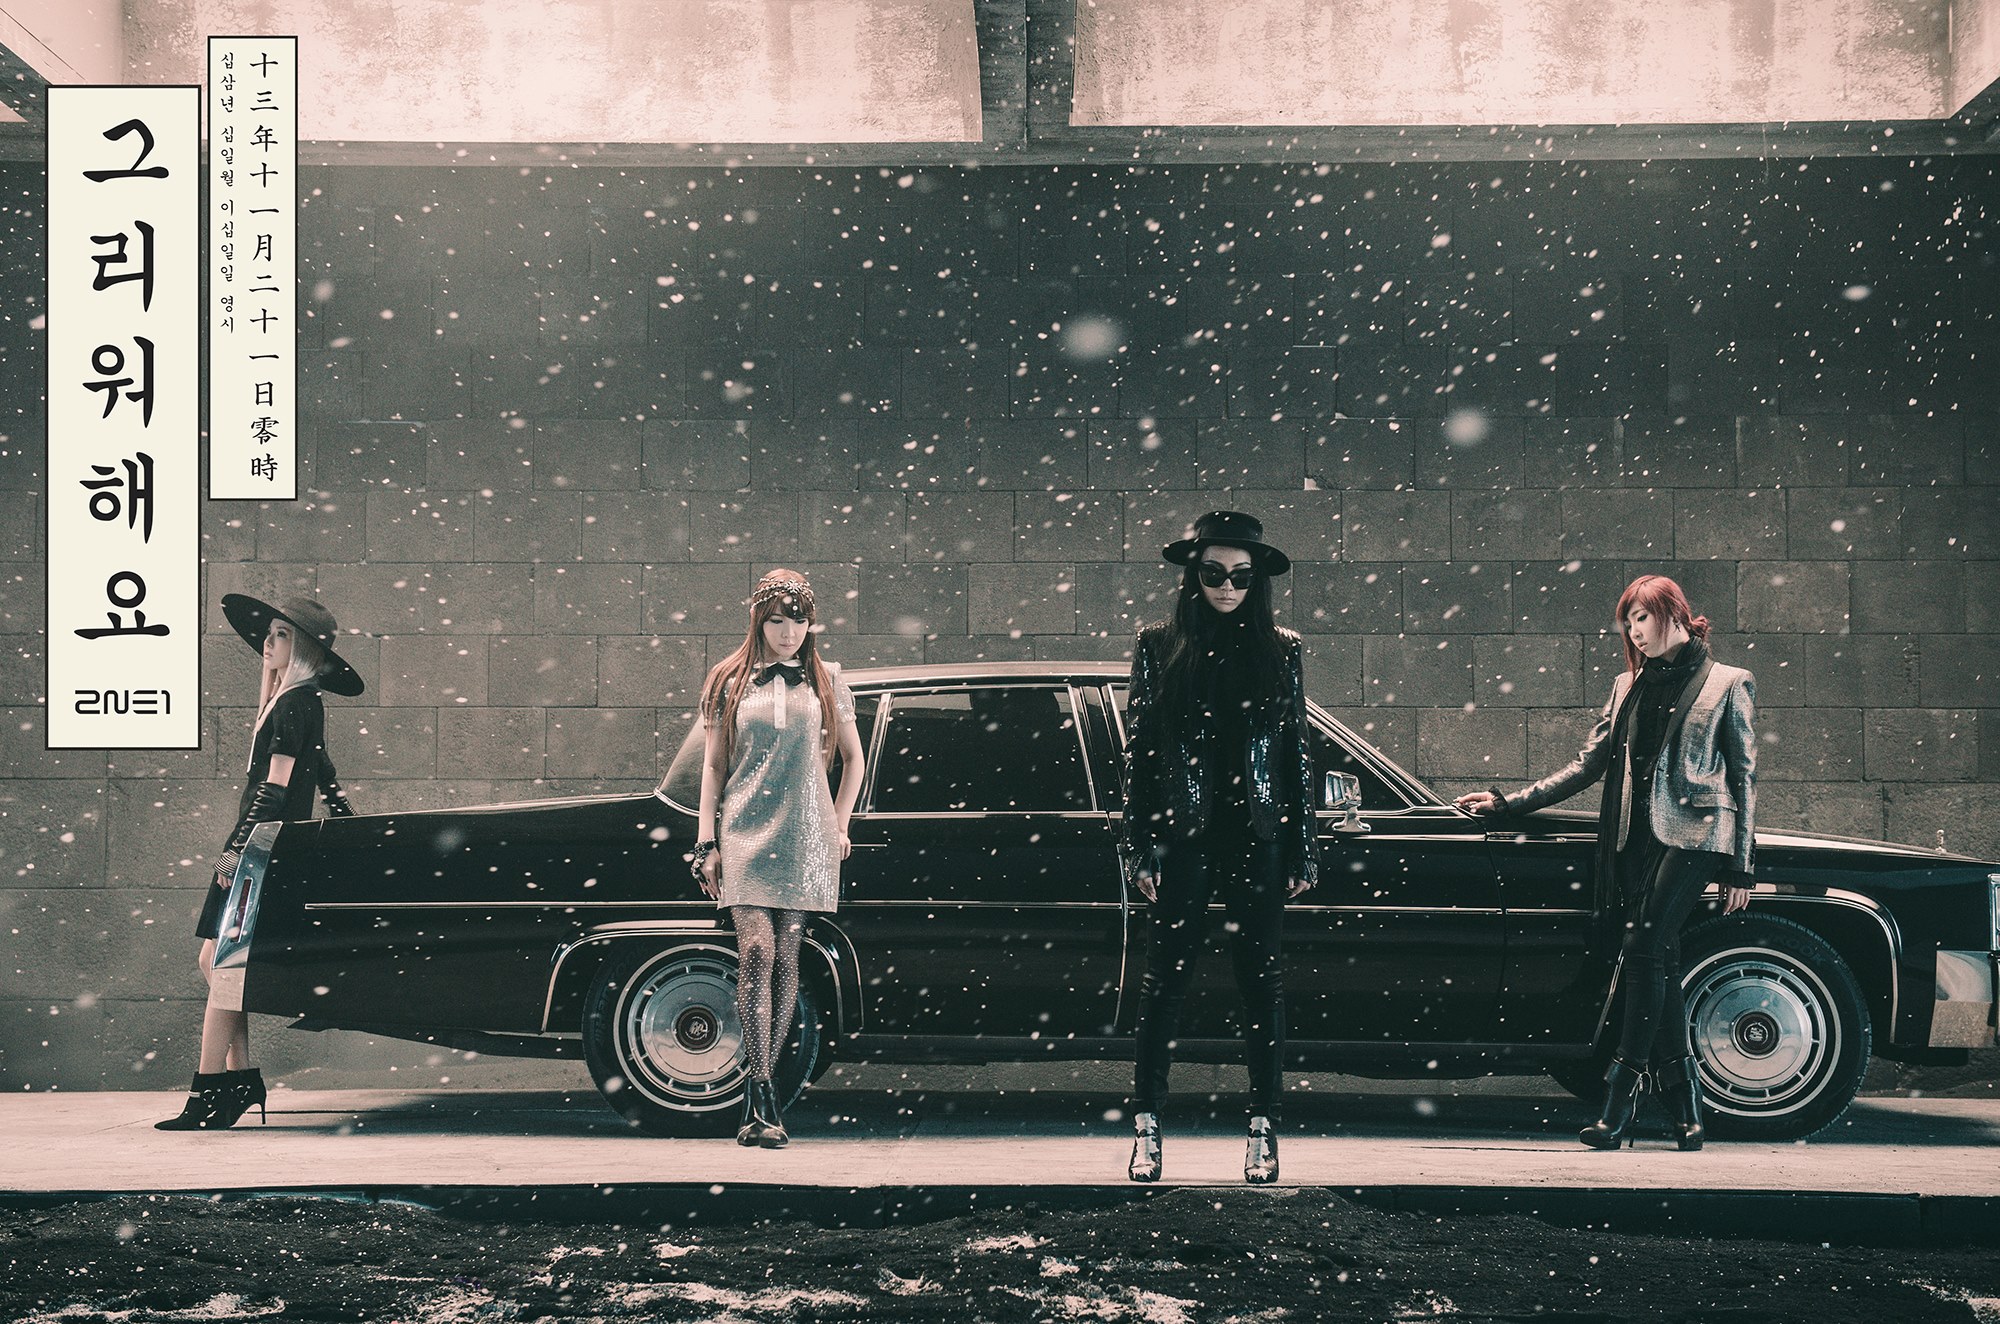 2NE1 – Concept Photos ‘Missing You’